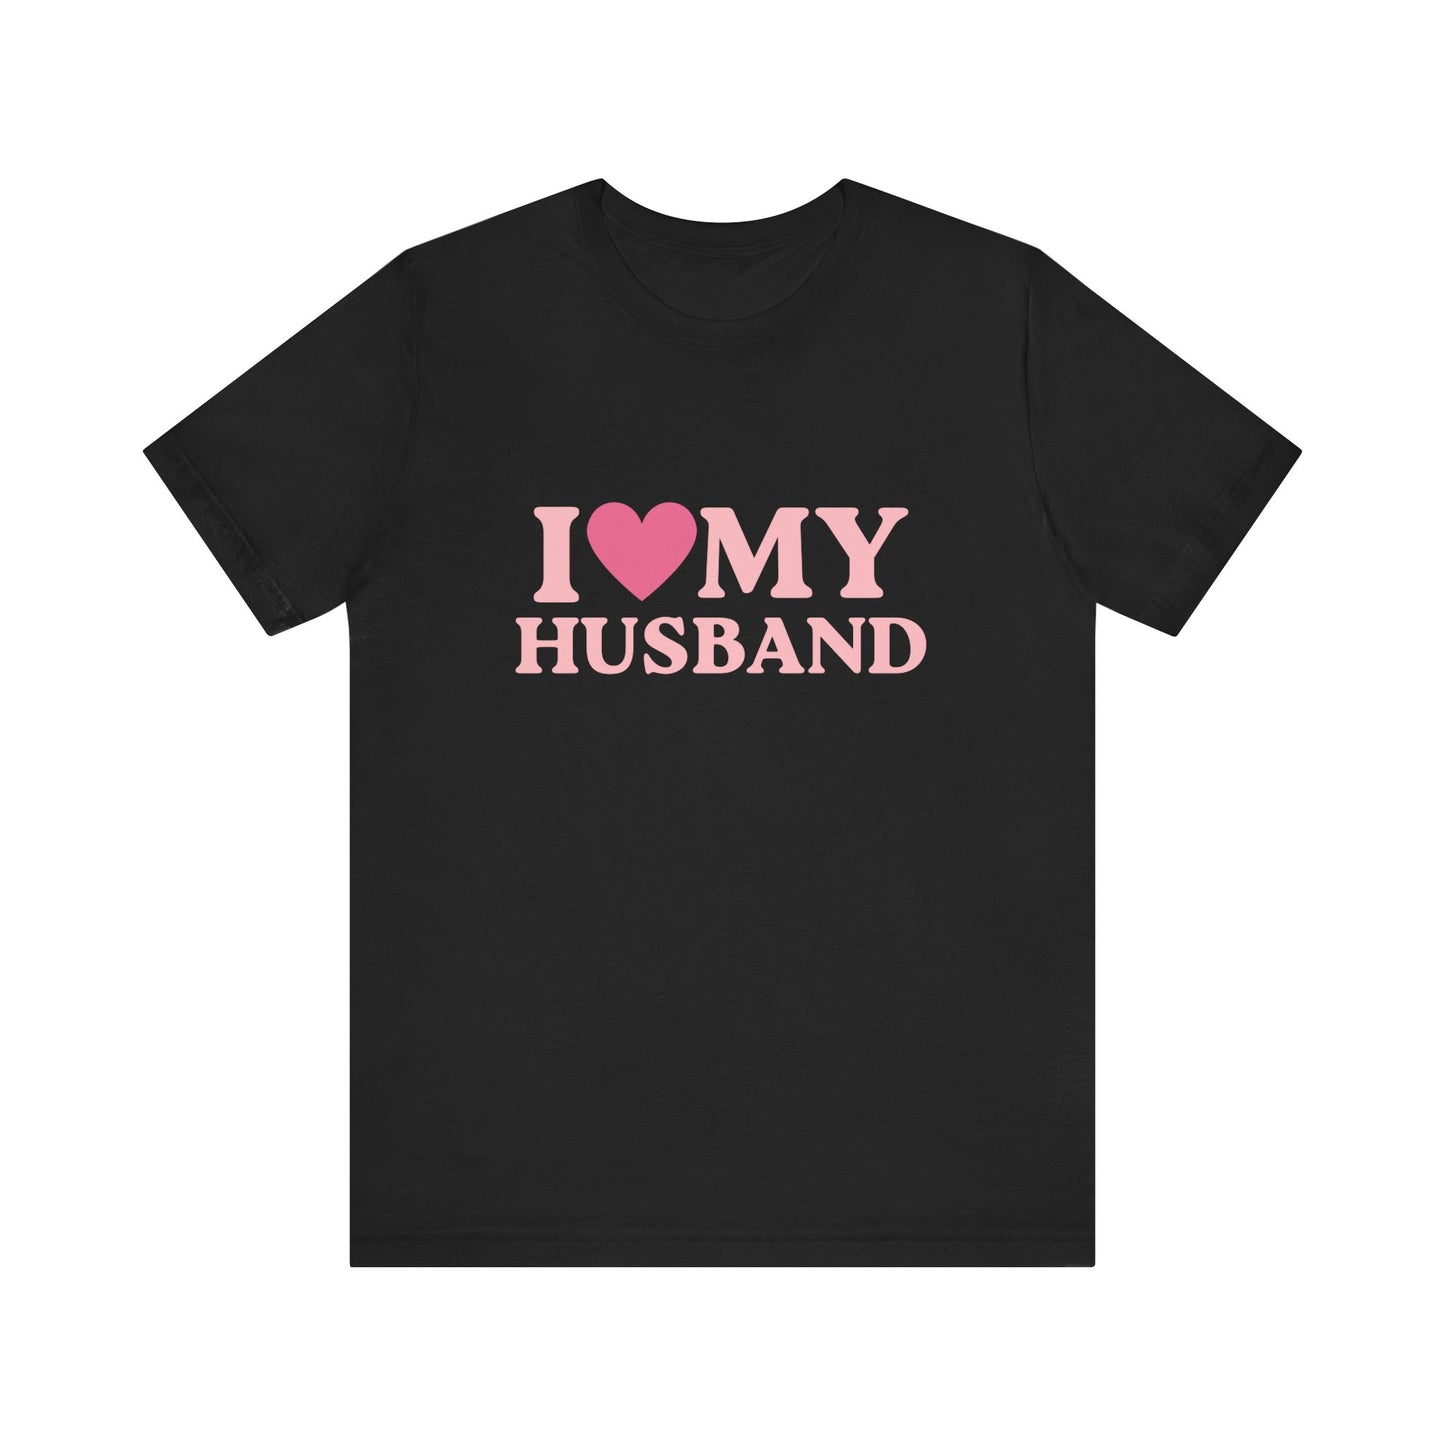 I Love My Husband - Unisex T-Shirt